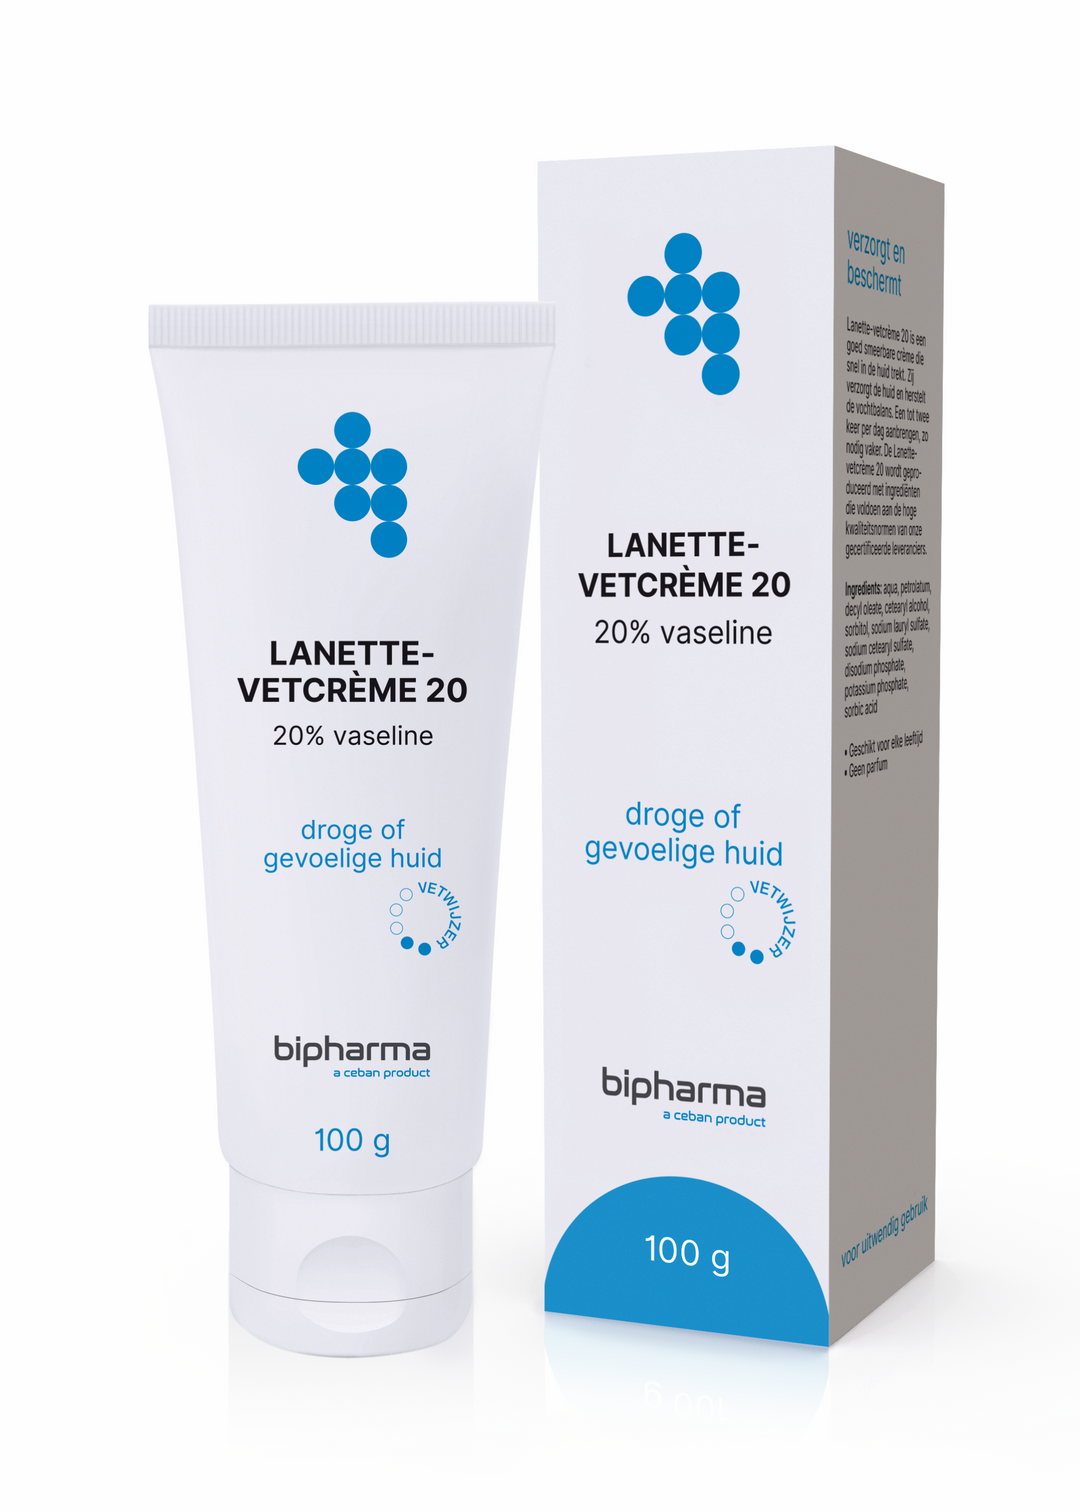 Bipharma Lanettecreme met 20% Vaseline - BIPHARMA BV - Huidproducten.nl